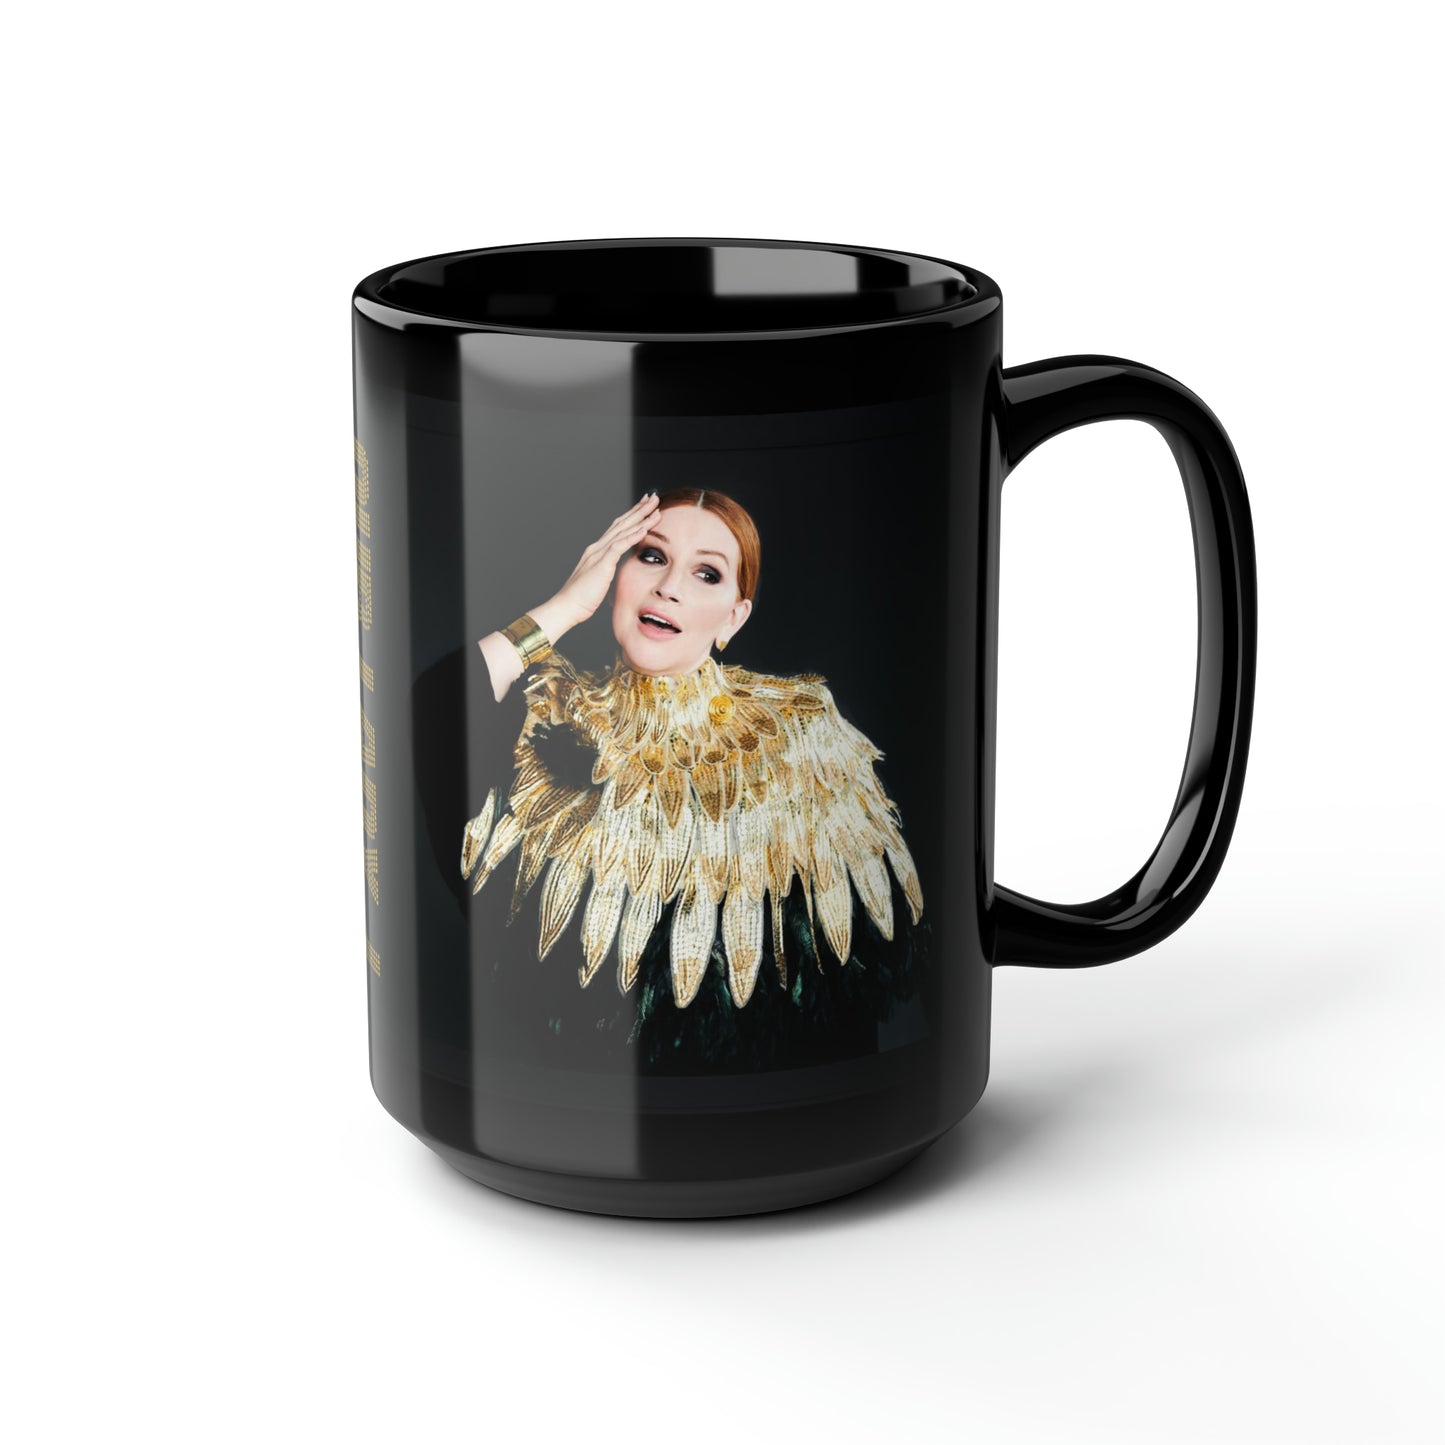 Our Lady J "Golden Wings" Mug, 15oz